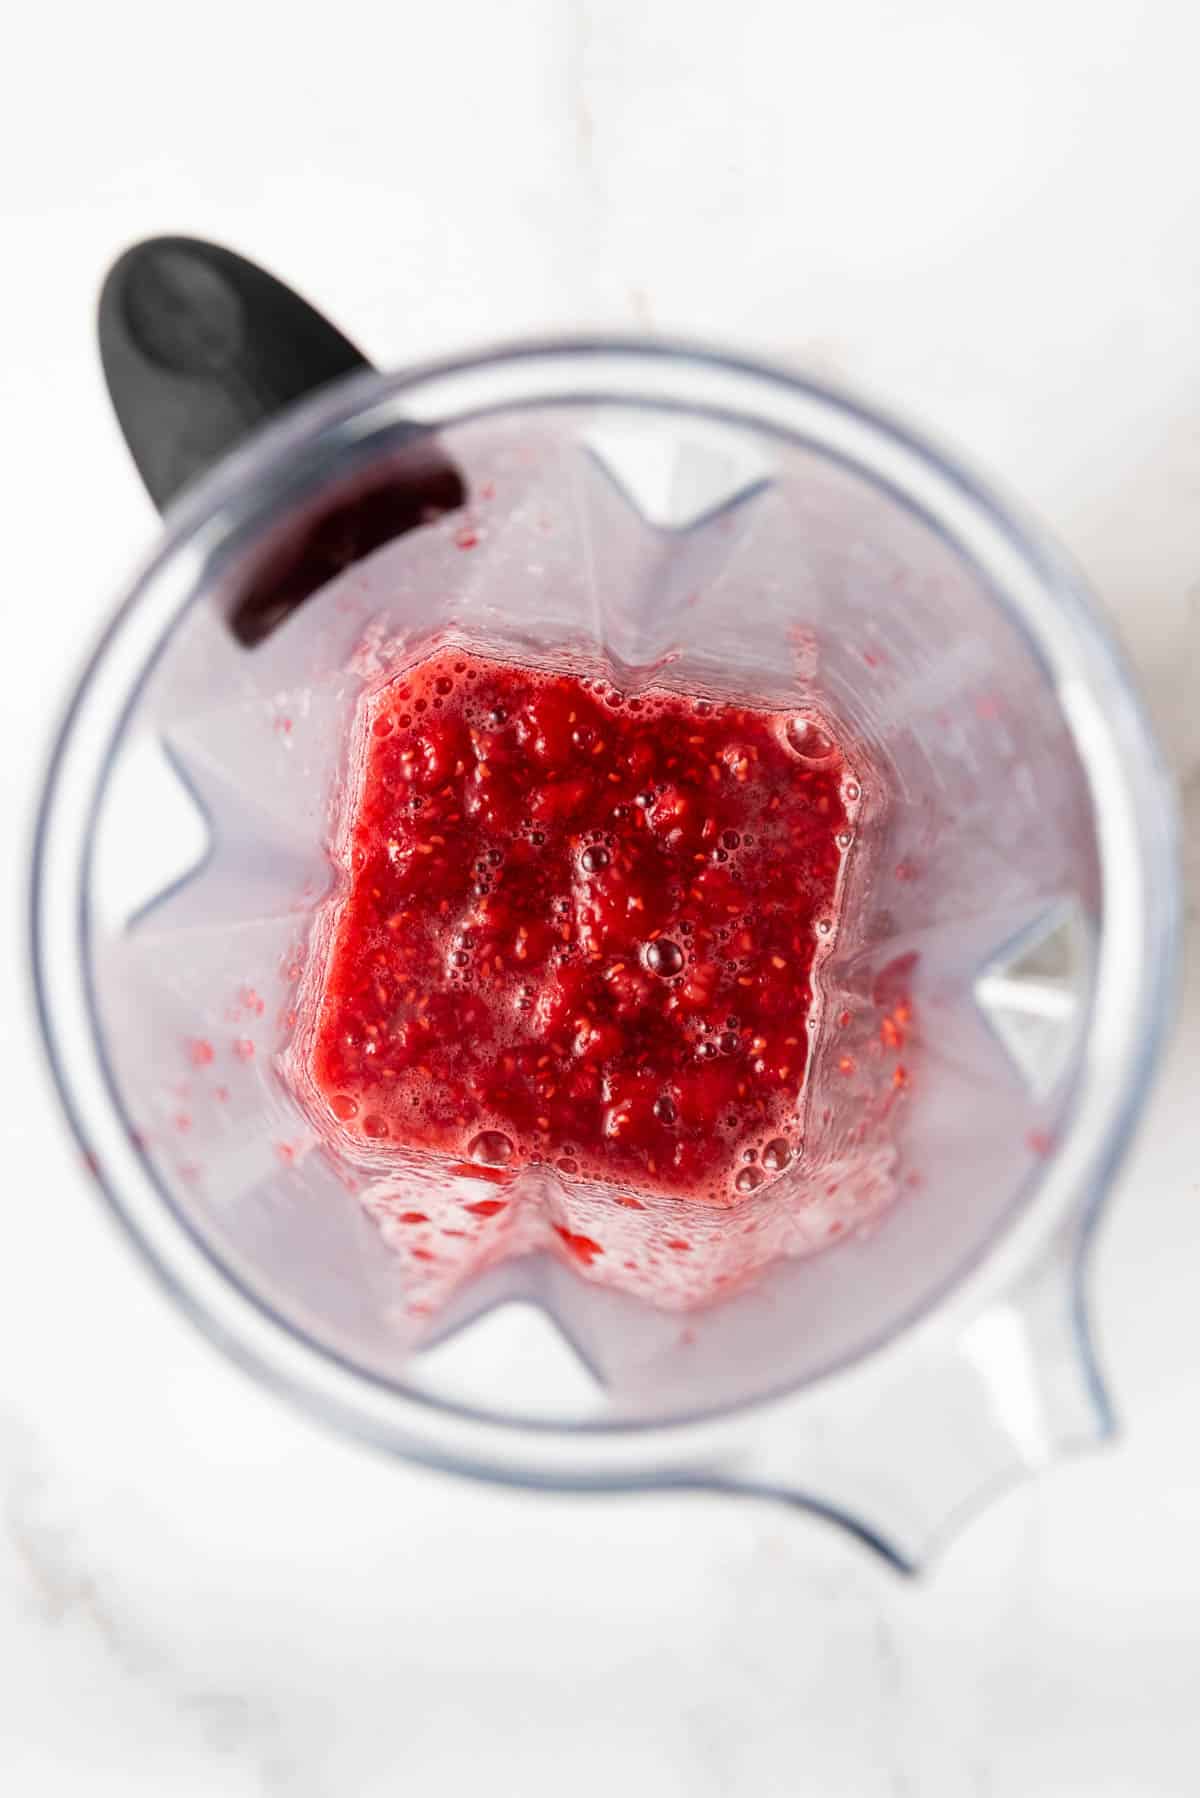 An image of thawed frozen raspberries in a blender.